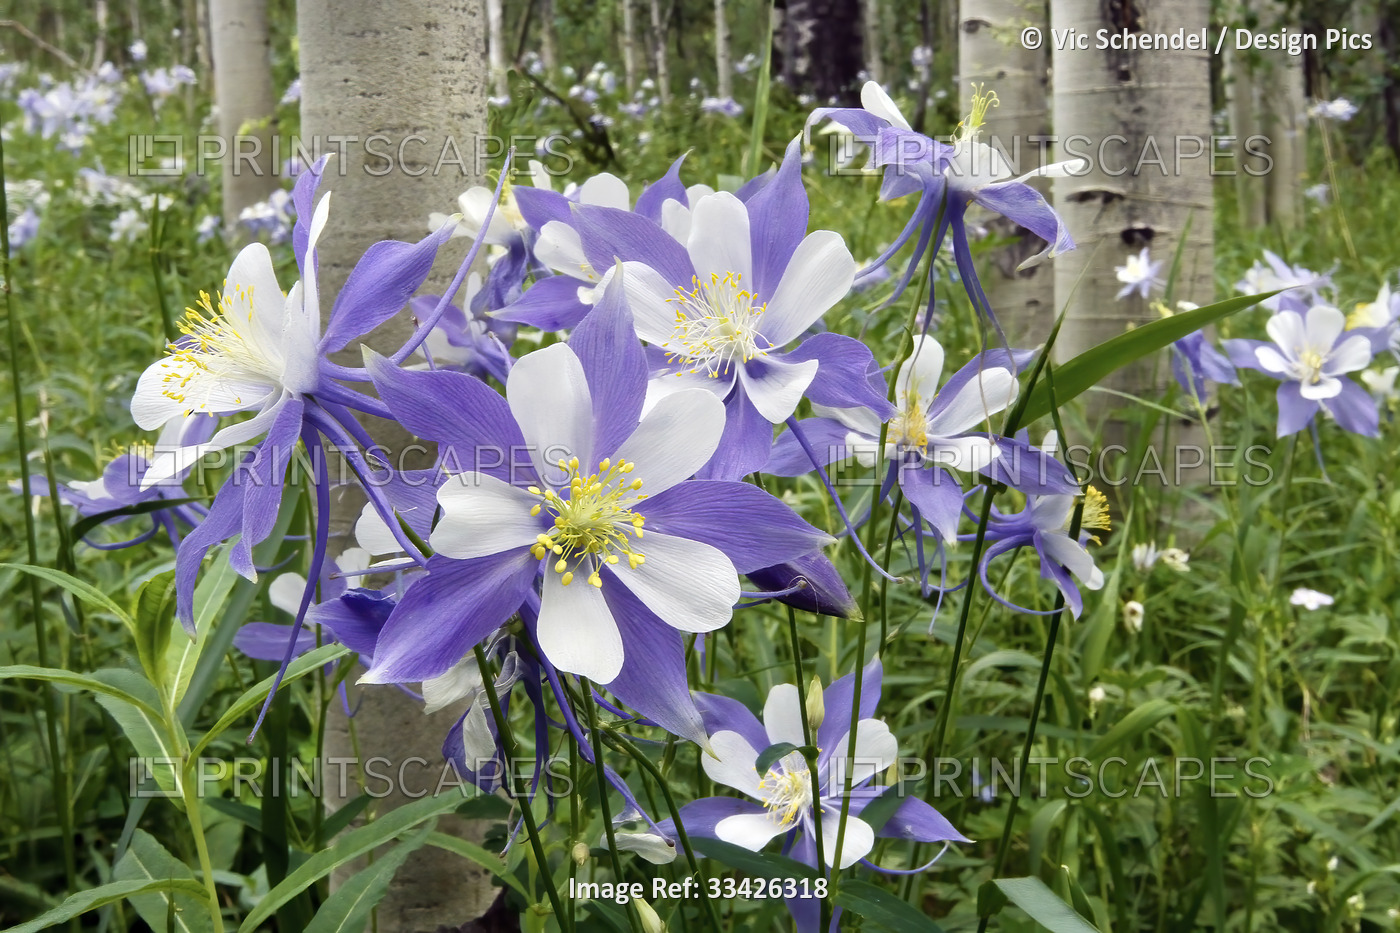 Wild columbine flowers (Aquilegia coerulea) in purple and white blooming in a ...